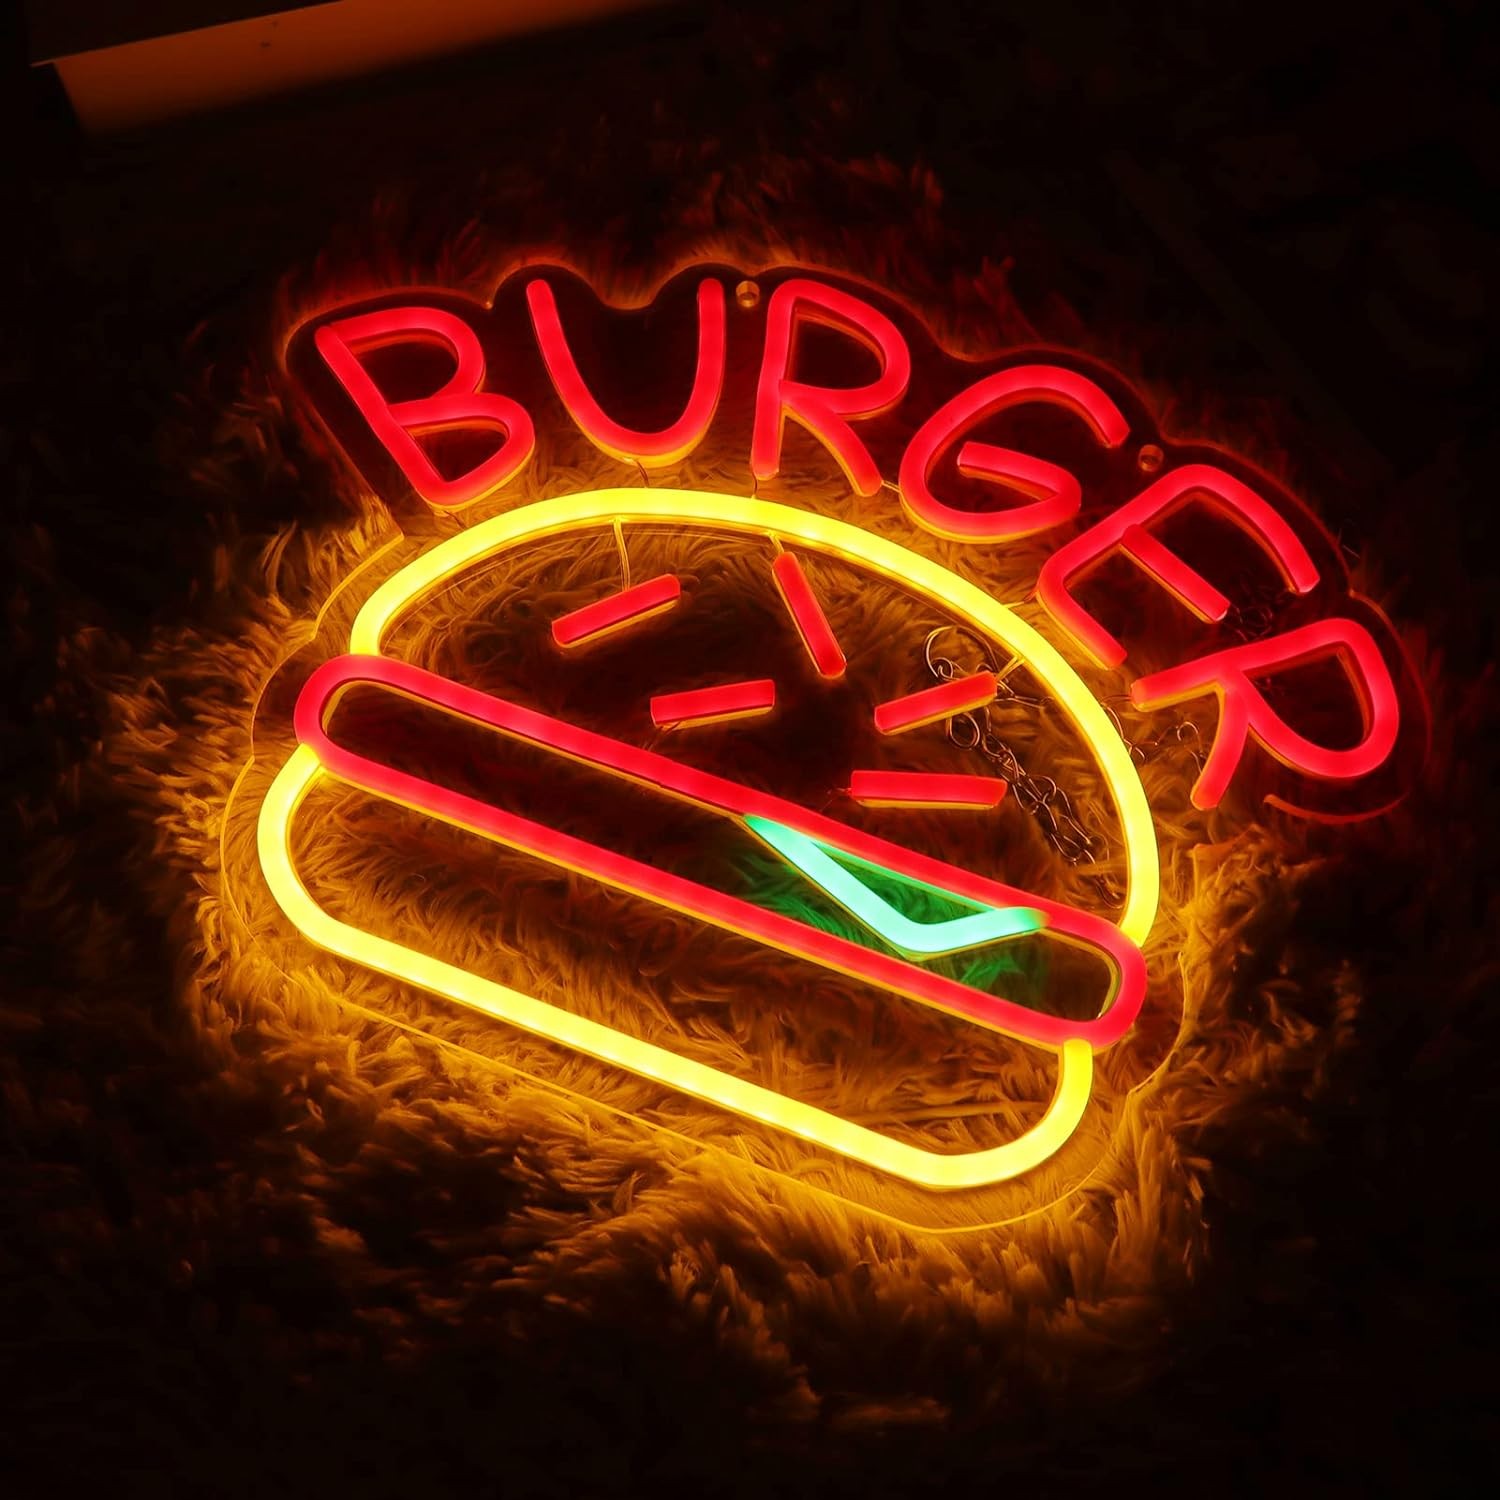 Burger Advertising valaistu hehkuva LED-valokuva